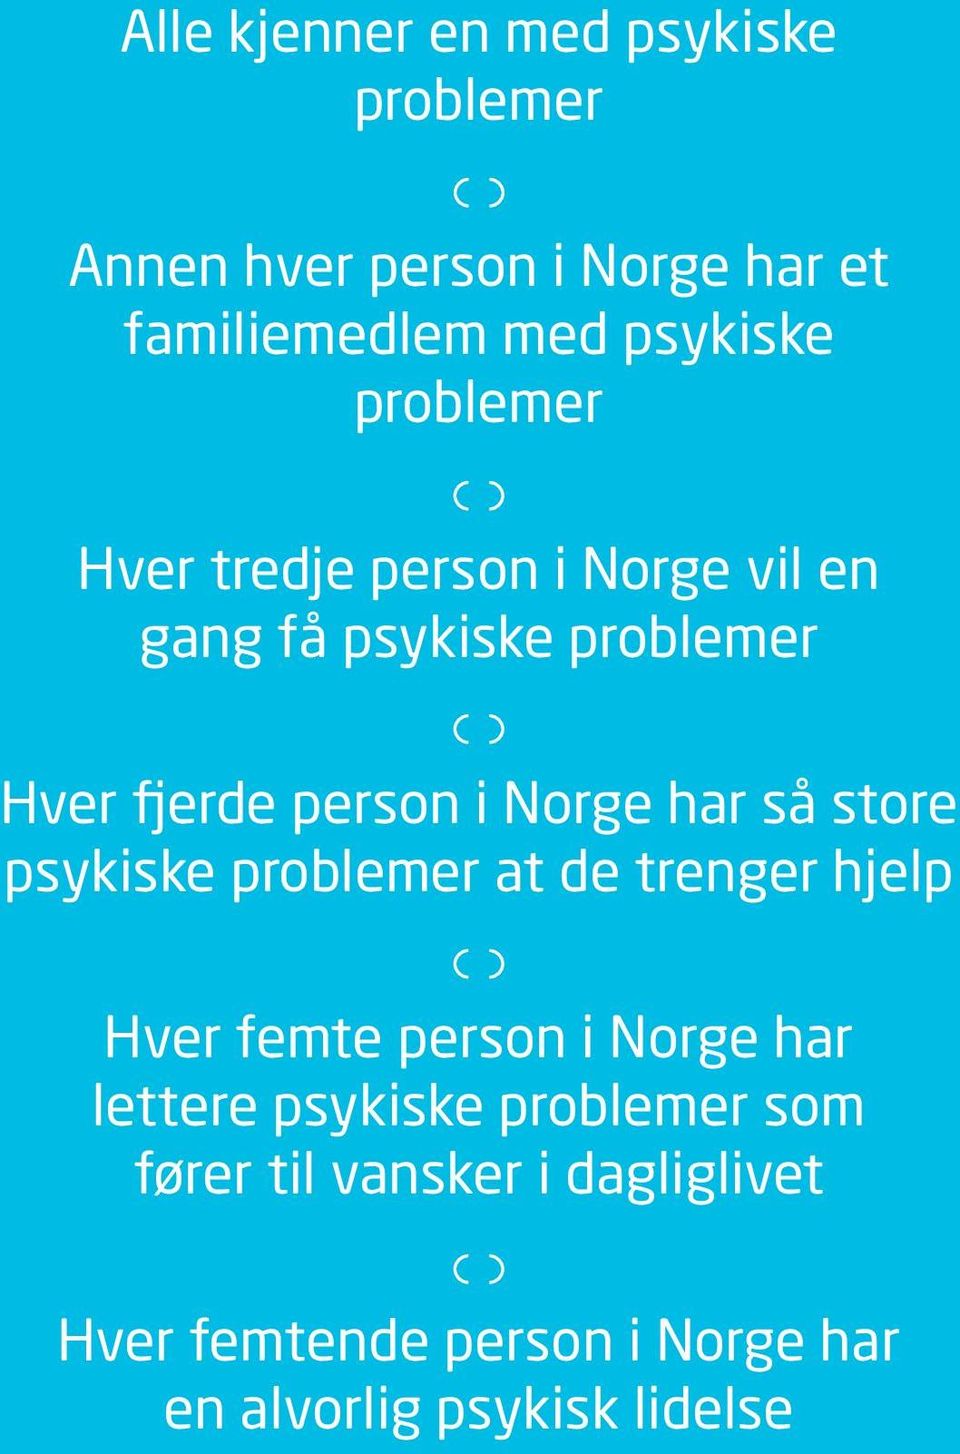 har så store psykiske problemer at de trenger hjelp Hver femte person i Norge har lettere psykiske